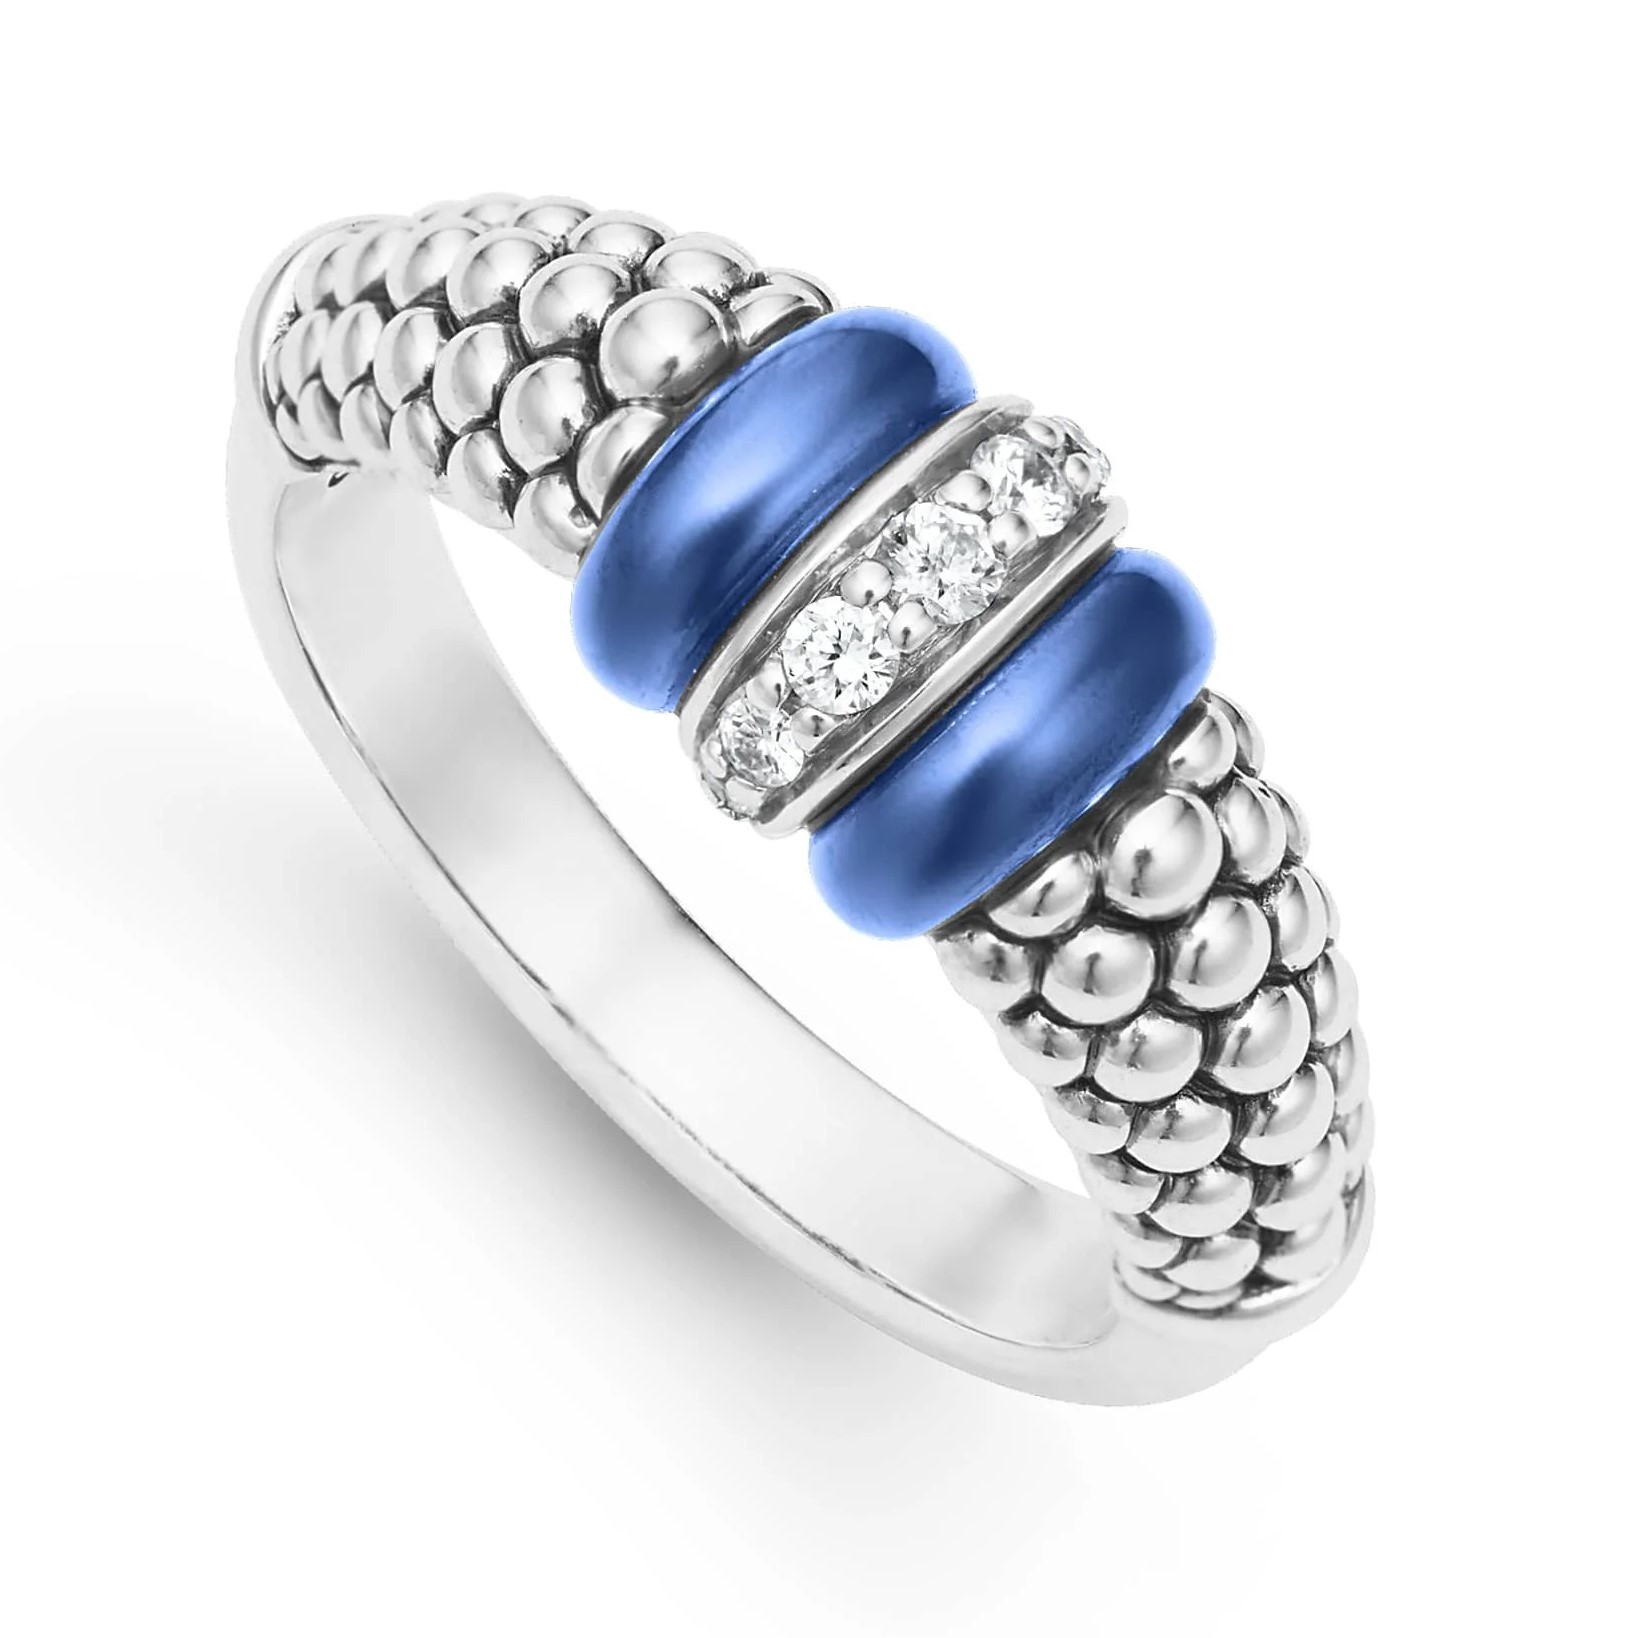 Lagos Sterling Silver & Marine Blue Caviar Ceramic Ring with Diamonds Size 7